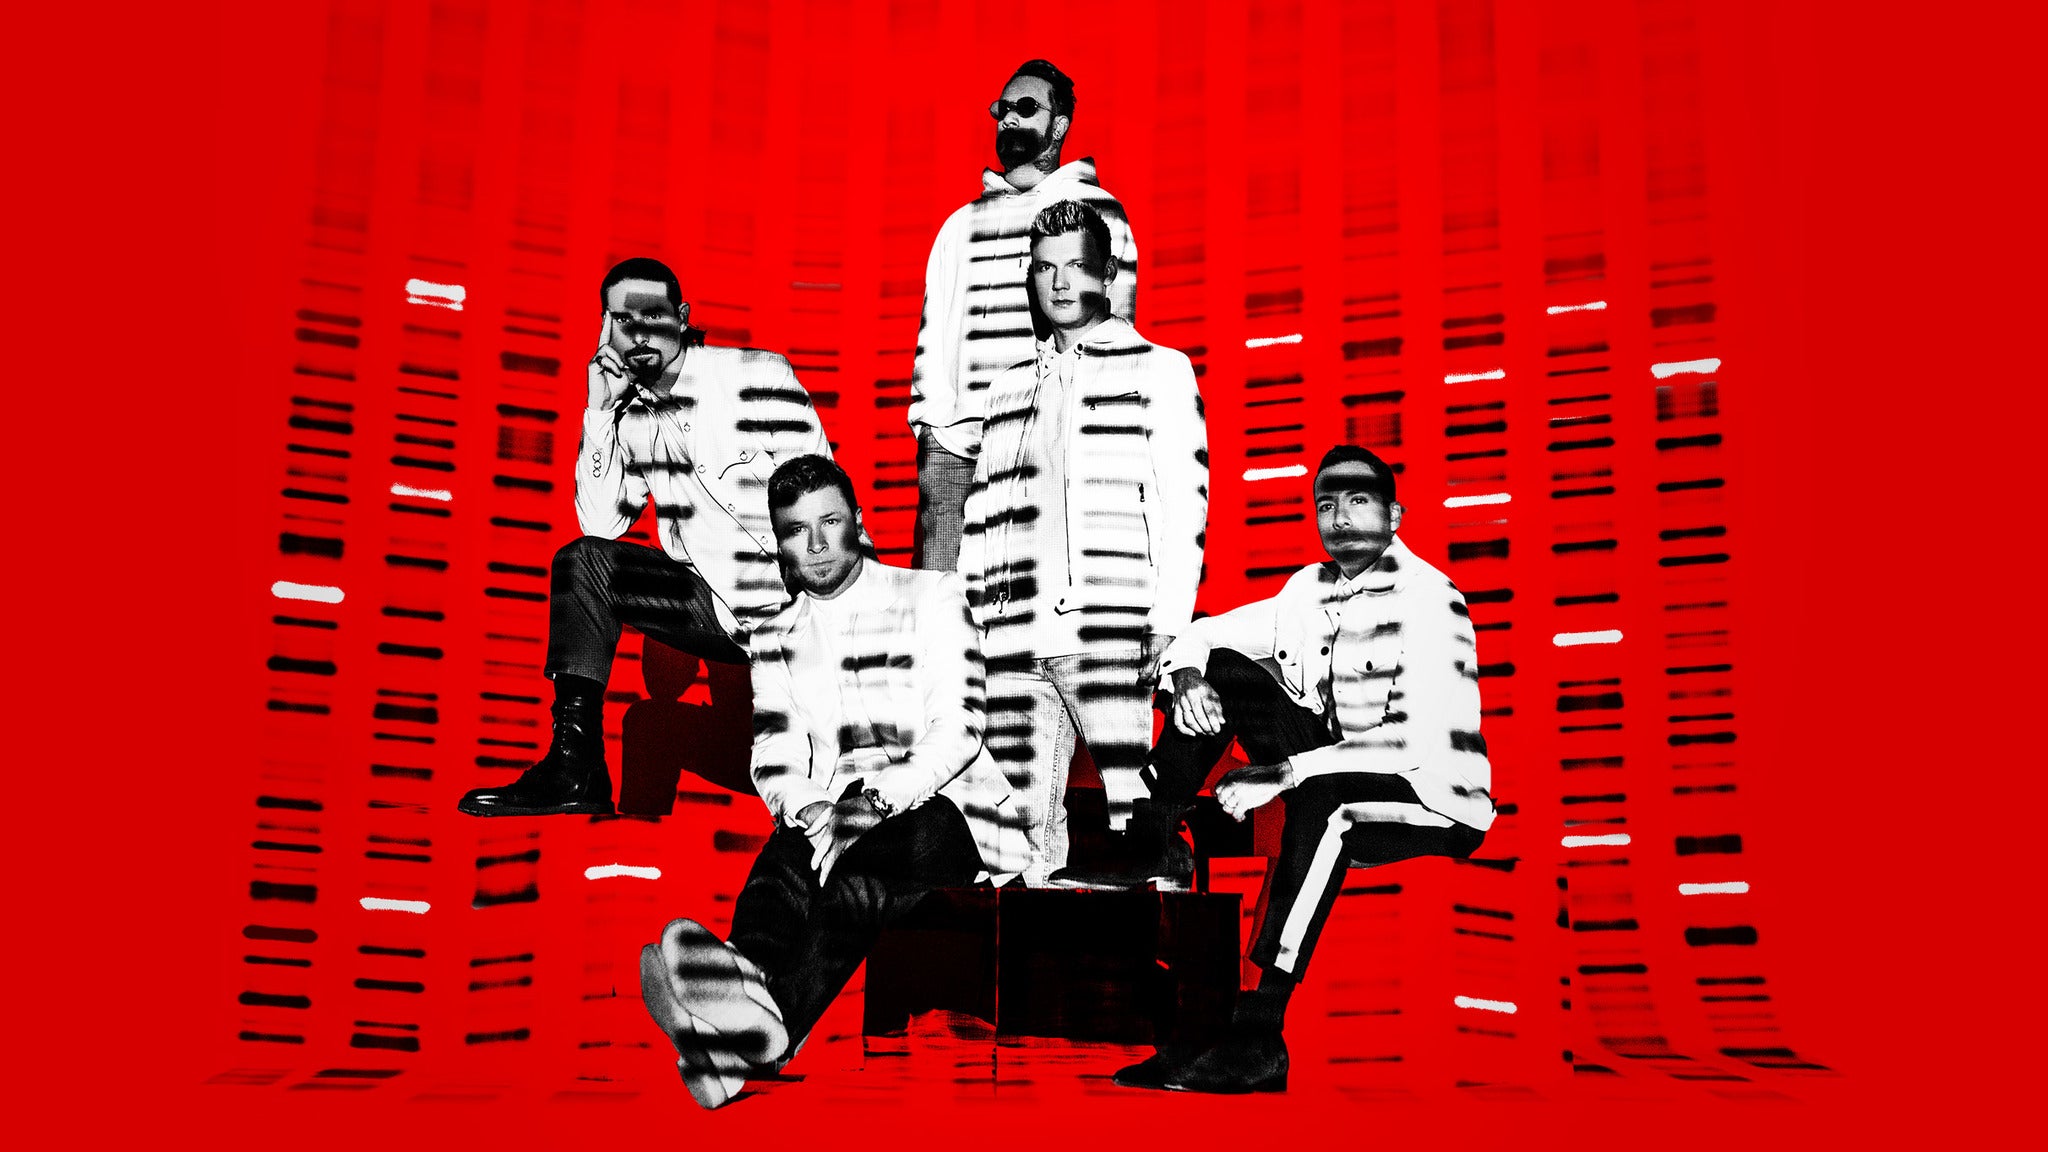 Backstreet Boys - A Very Backstreet Christmas Party in Las Vegas promo photo for Partner presale offer code